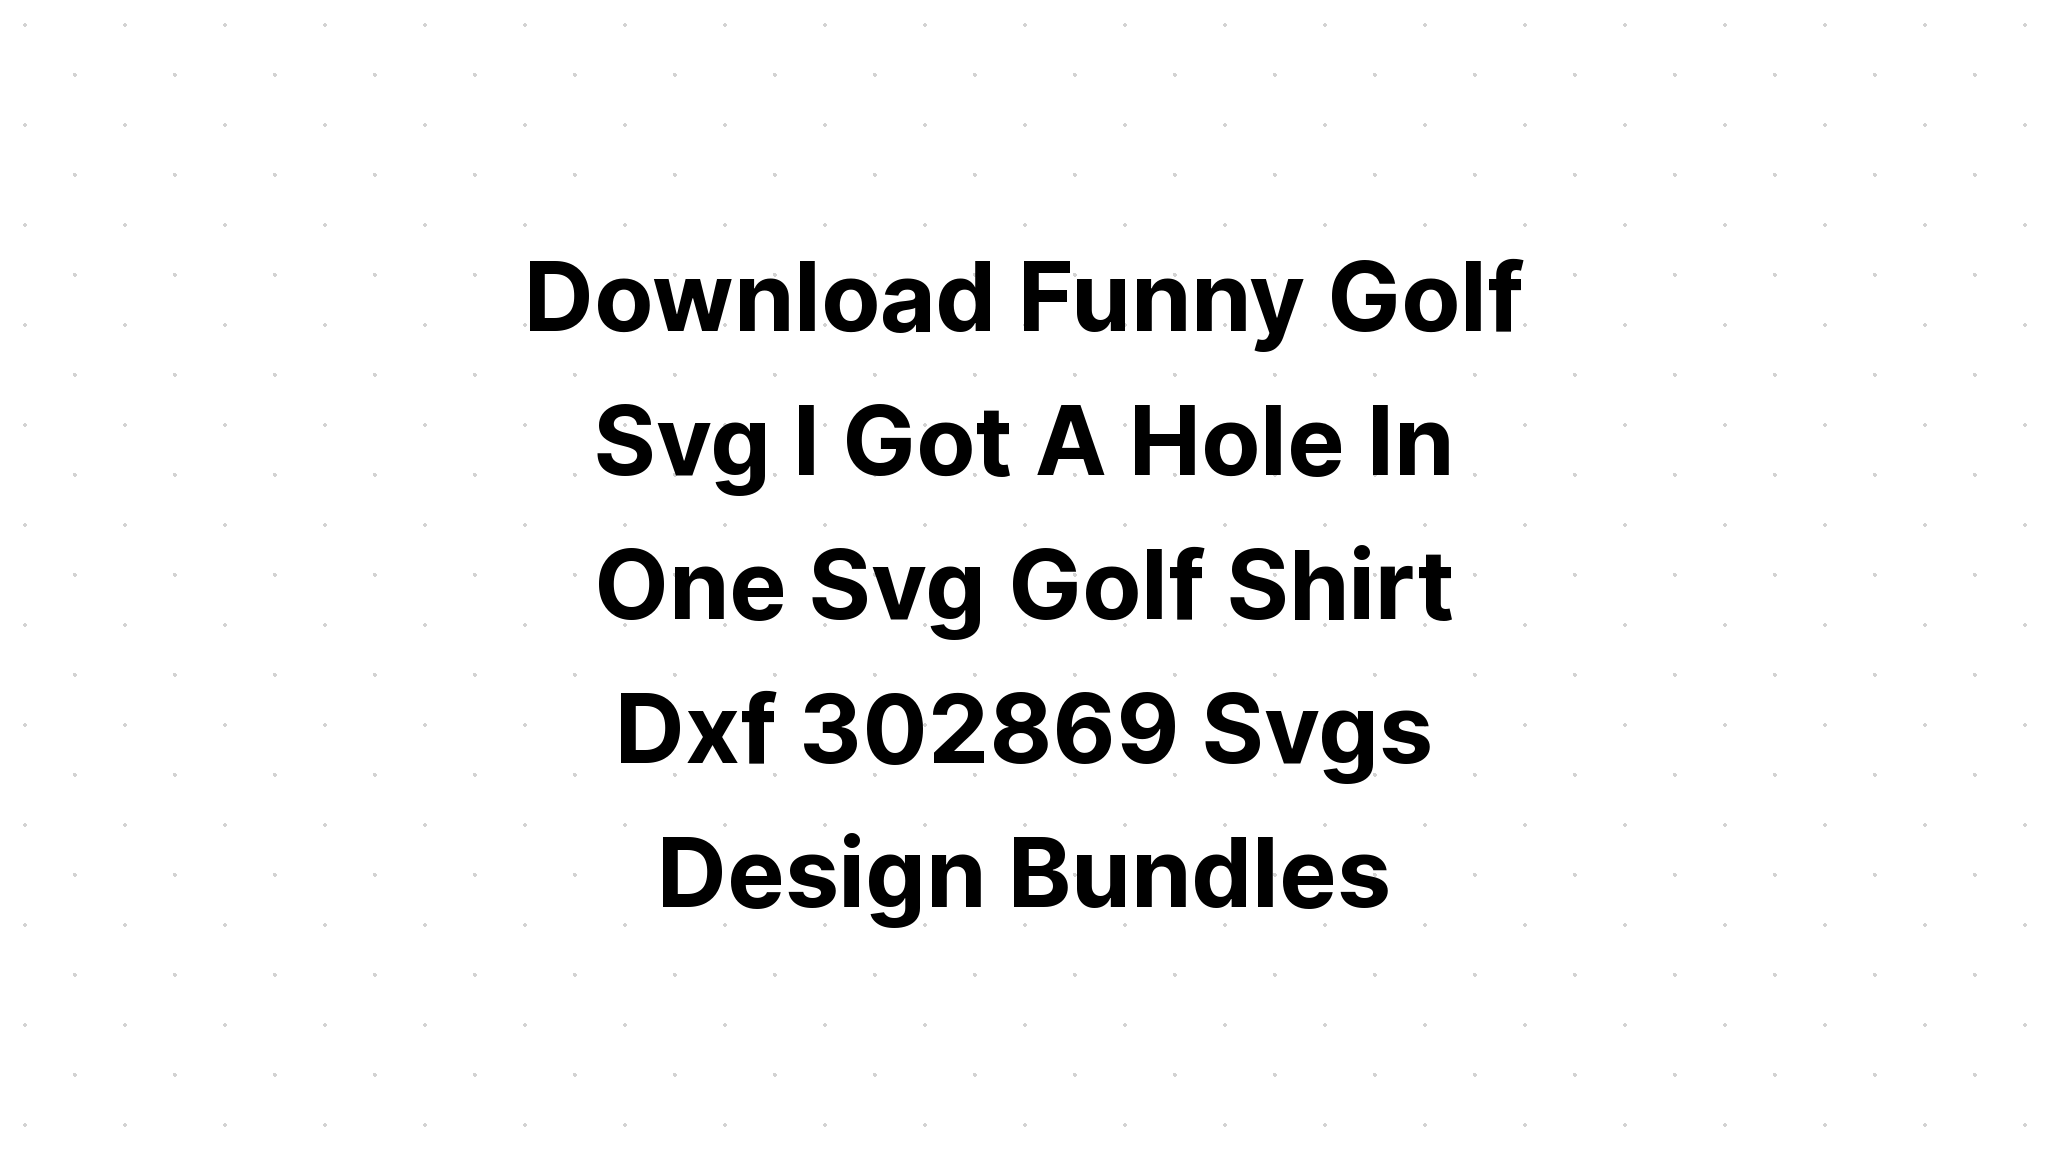 Download Hole Cutting Svg - Free SVG Cut File